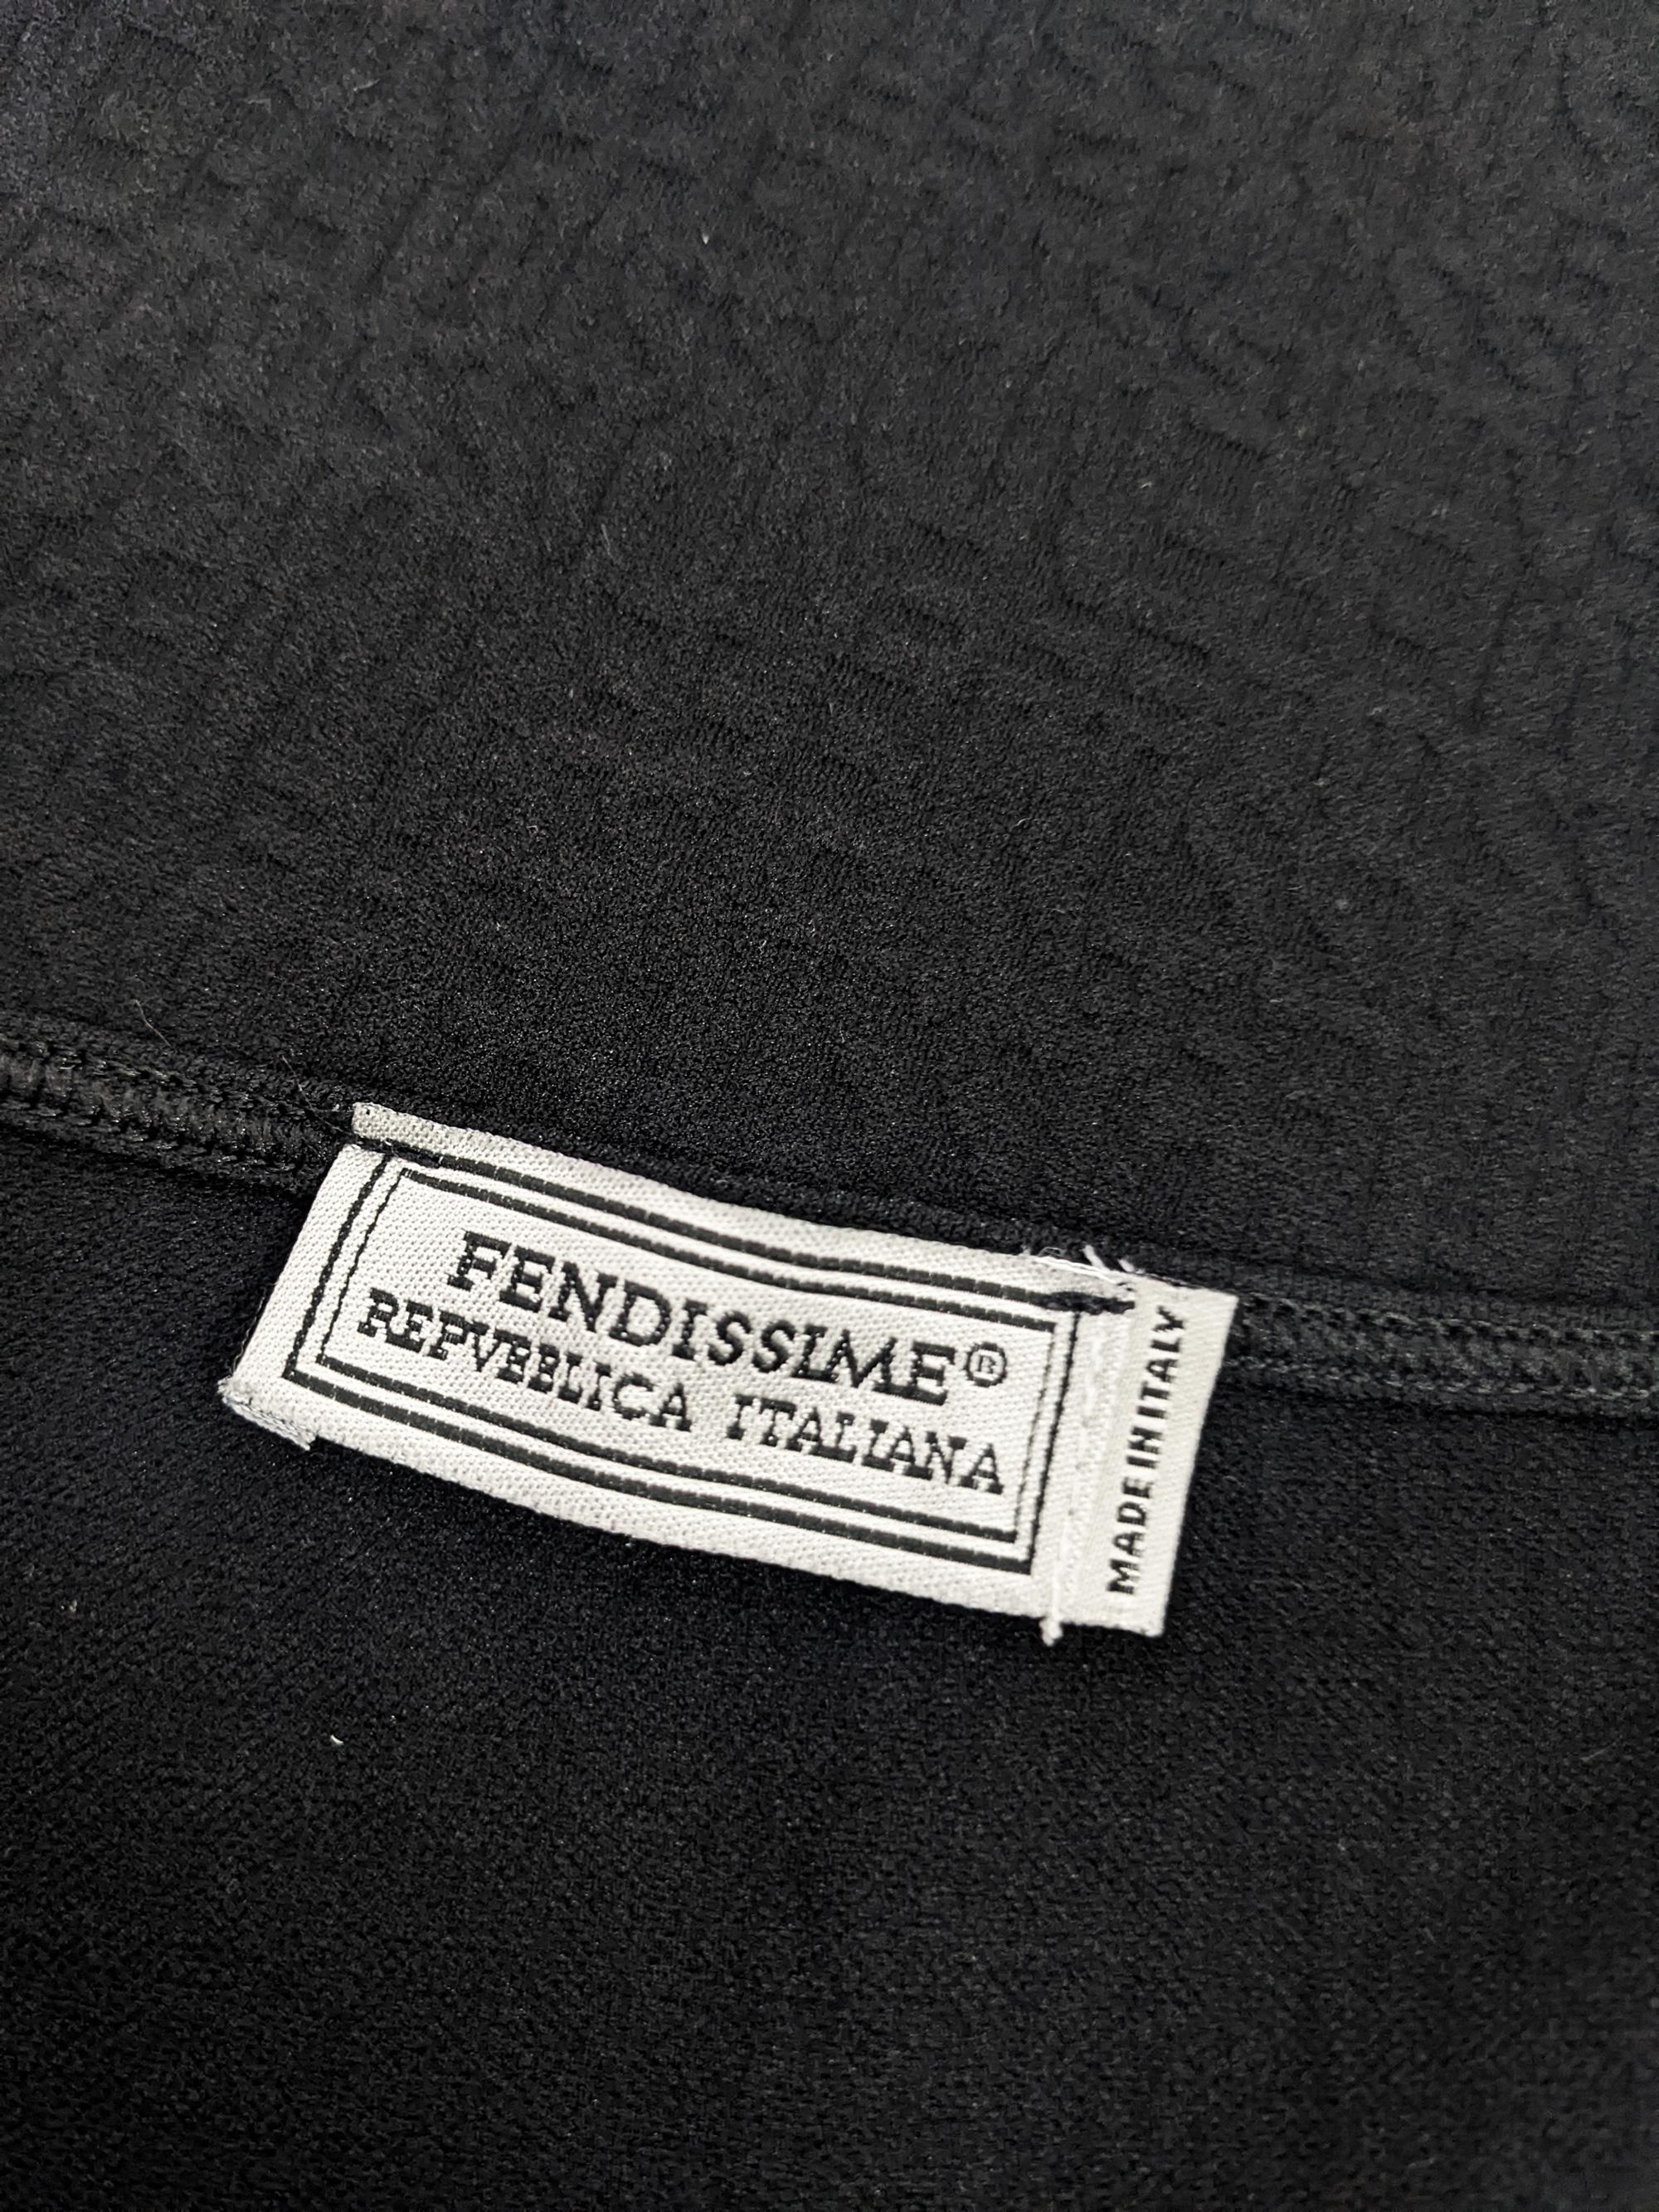 Fendi Vintage Fendissime Logo Pattern Simple Little Black Shift Dress, 1990s For Sale 6